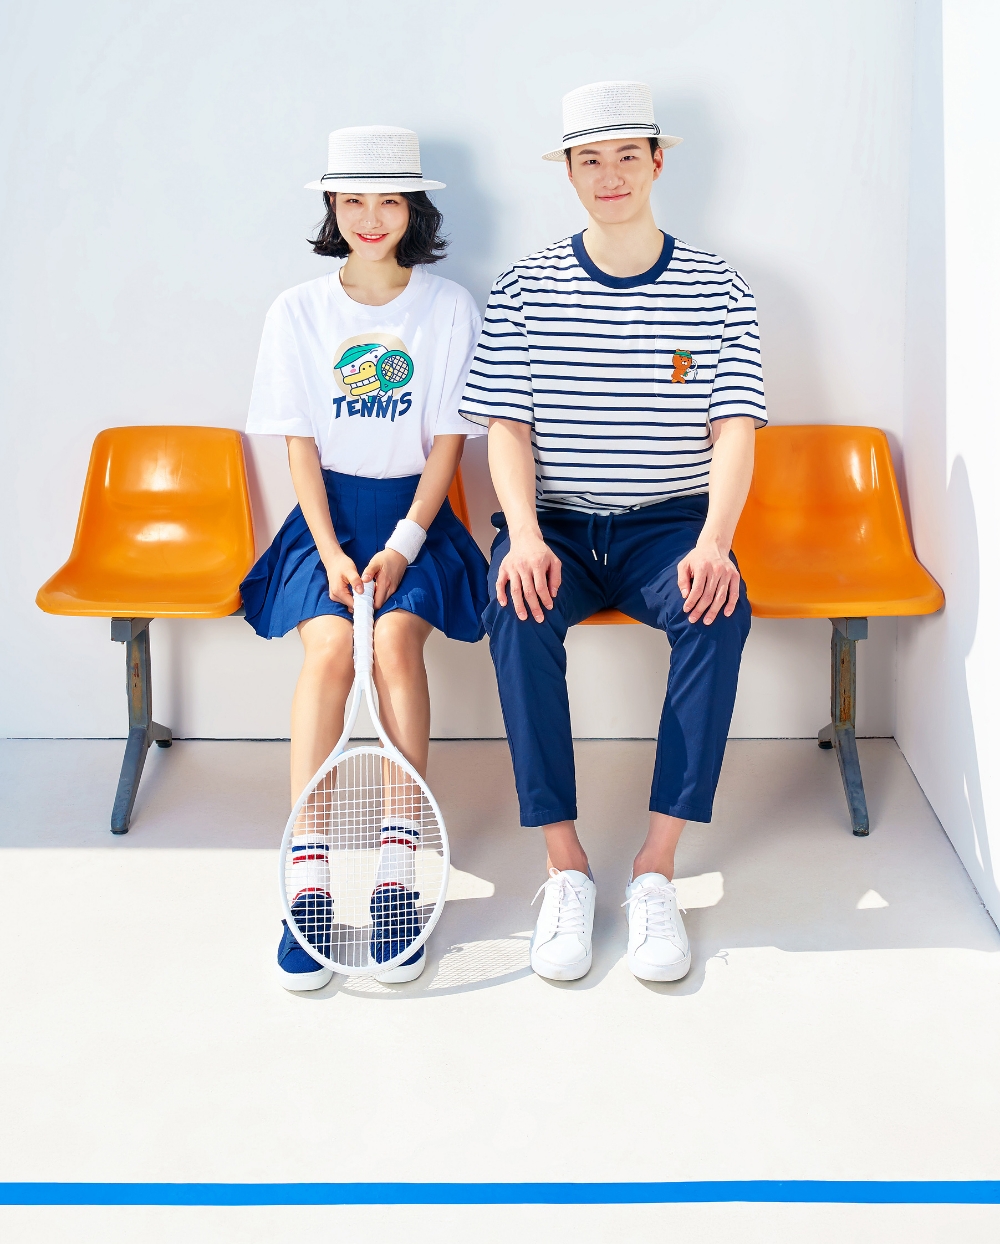 NII x 카카오프렌즈, ‘플레이 테니스’ 티셔츠 시리즈 인기